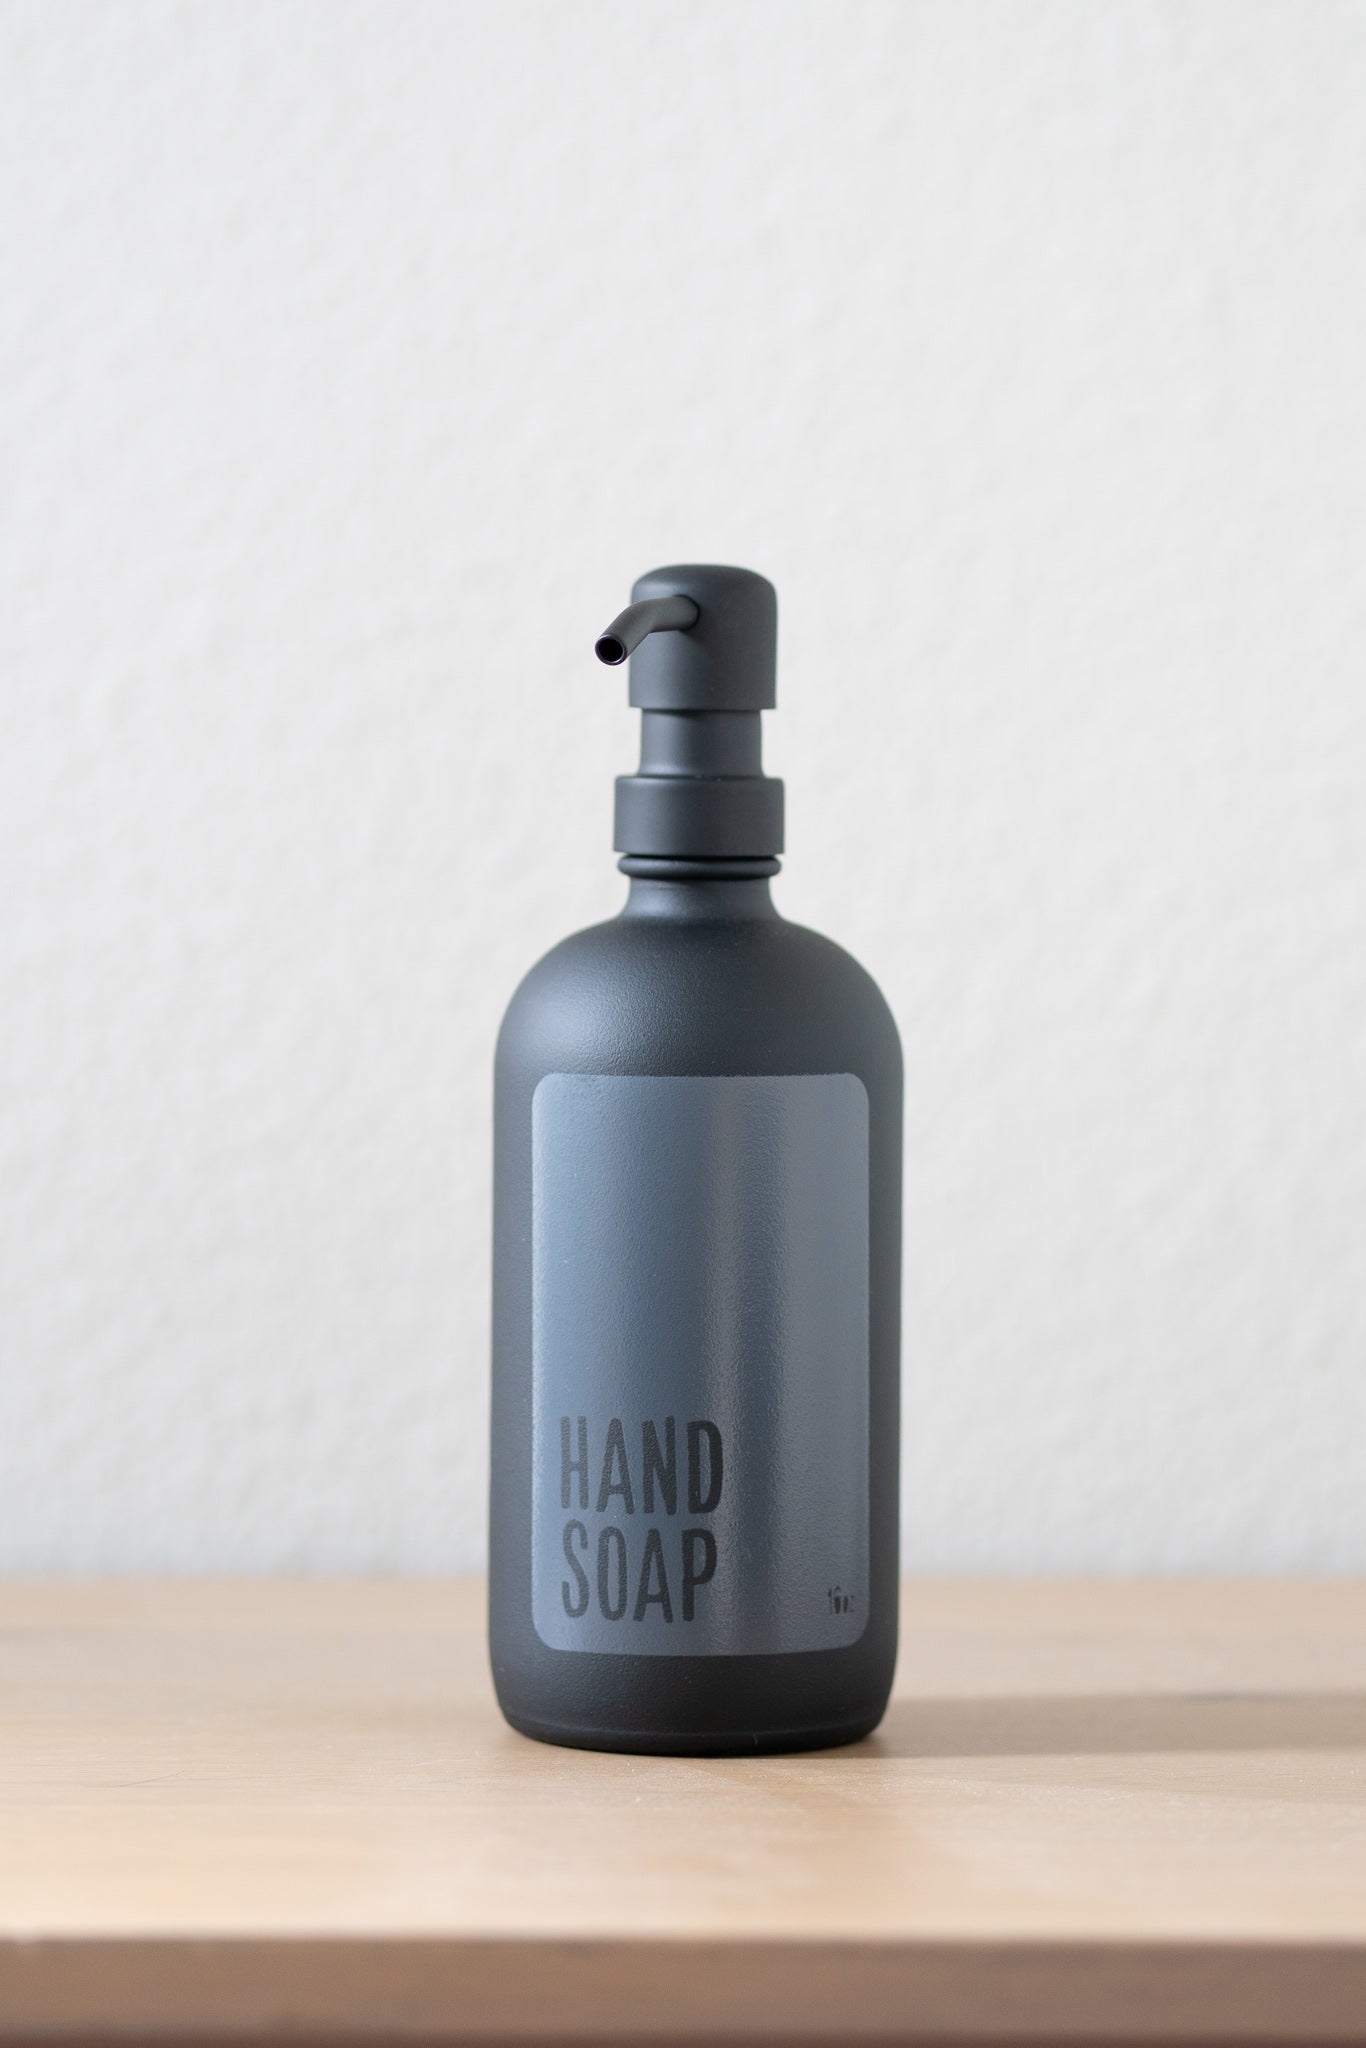 Reusable matte black glass hand soap dispenser with black metal pump